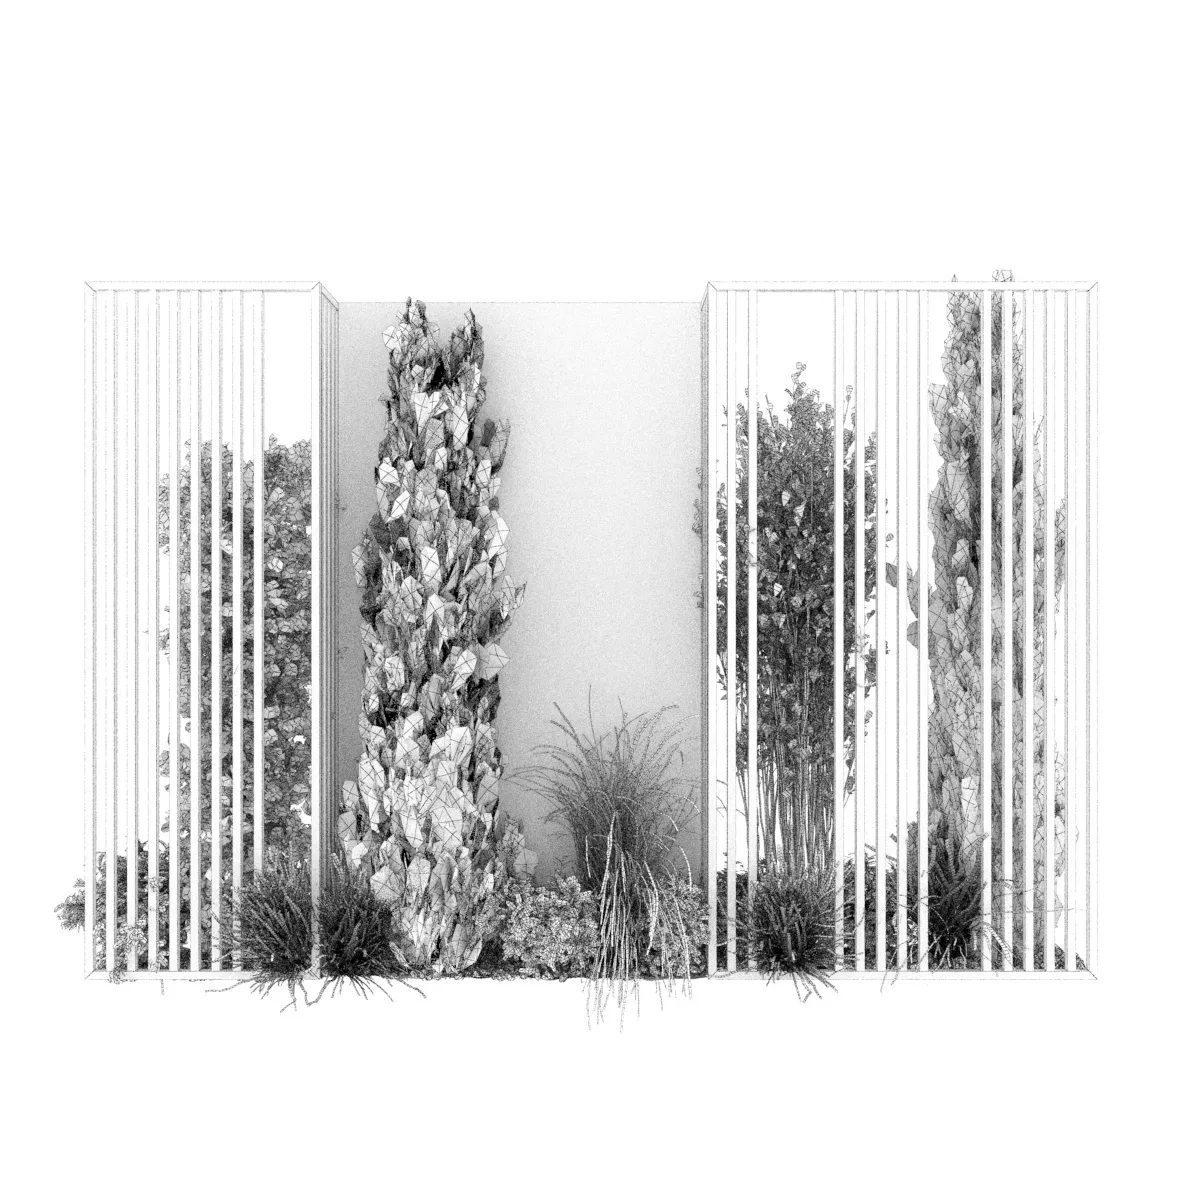 Collection plant vol 371 - Urban environment - wall yard - leaf - pine - blender - 3dmax - cinema 4d